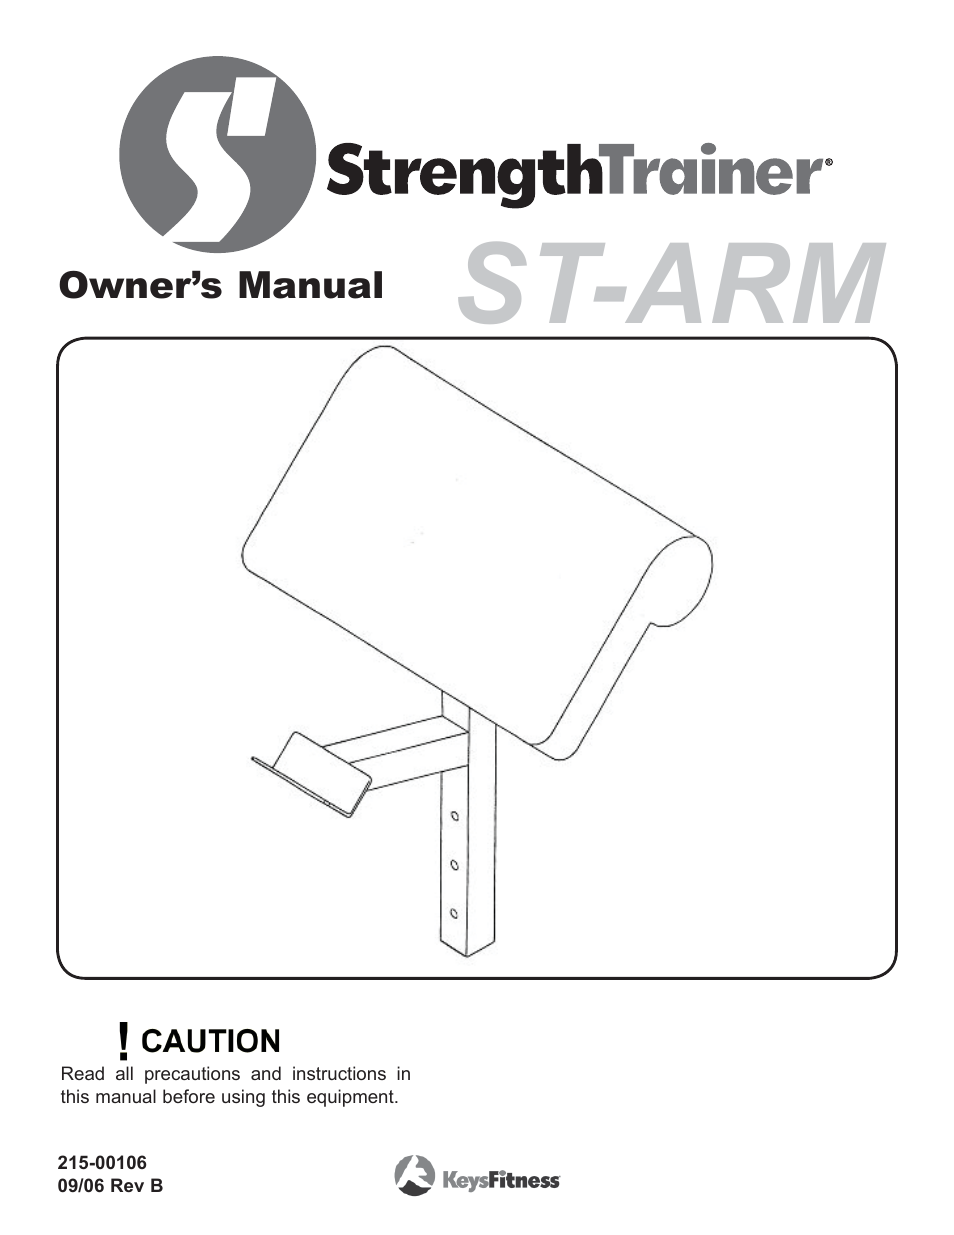 StrenghtTrainer ST-ARM